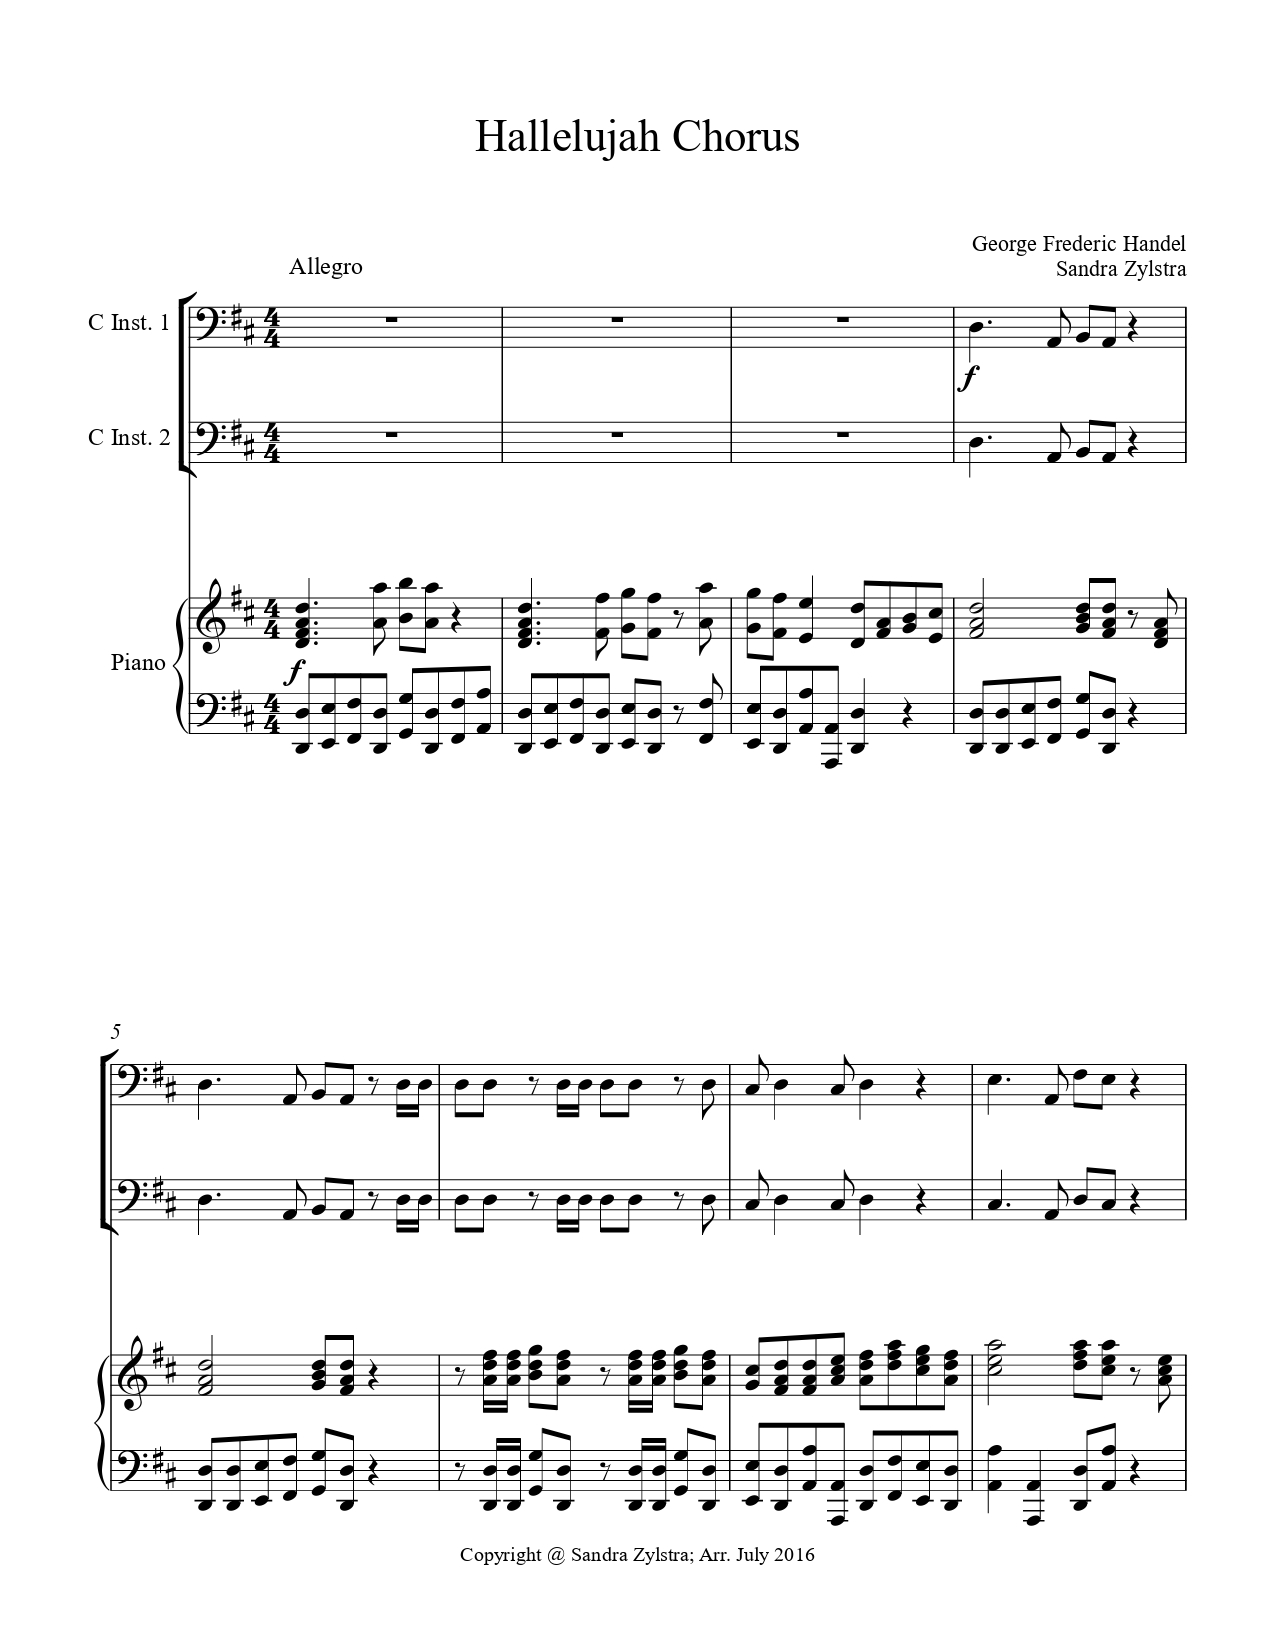 Hallelujah Chorus bass C instrument duet parts cover page 00021